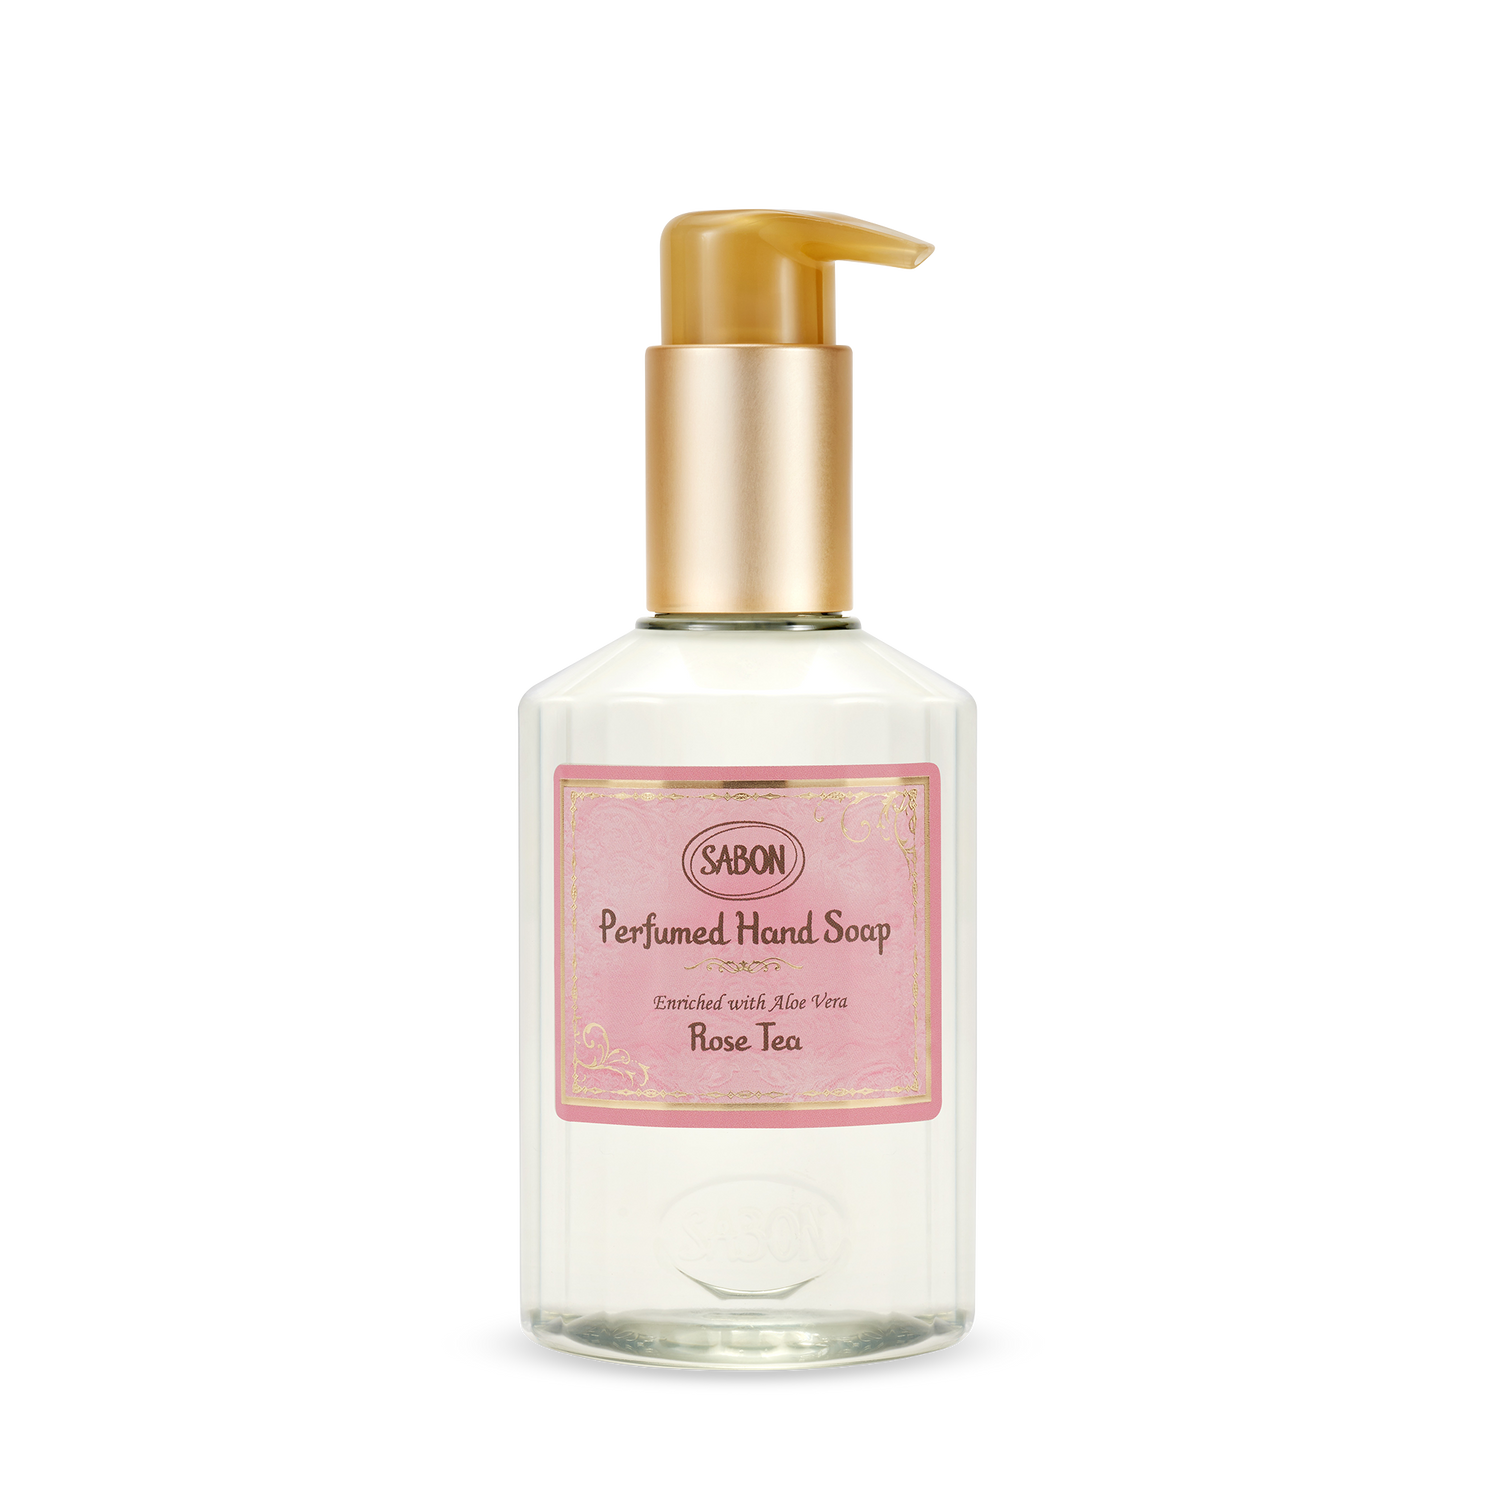 SABON Rose Tea Perfumed Hand Soap Bottle (200ml)